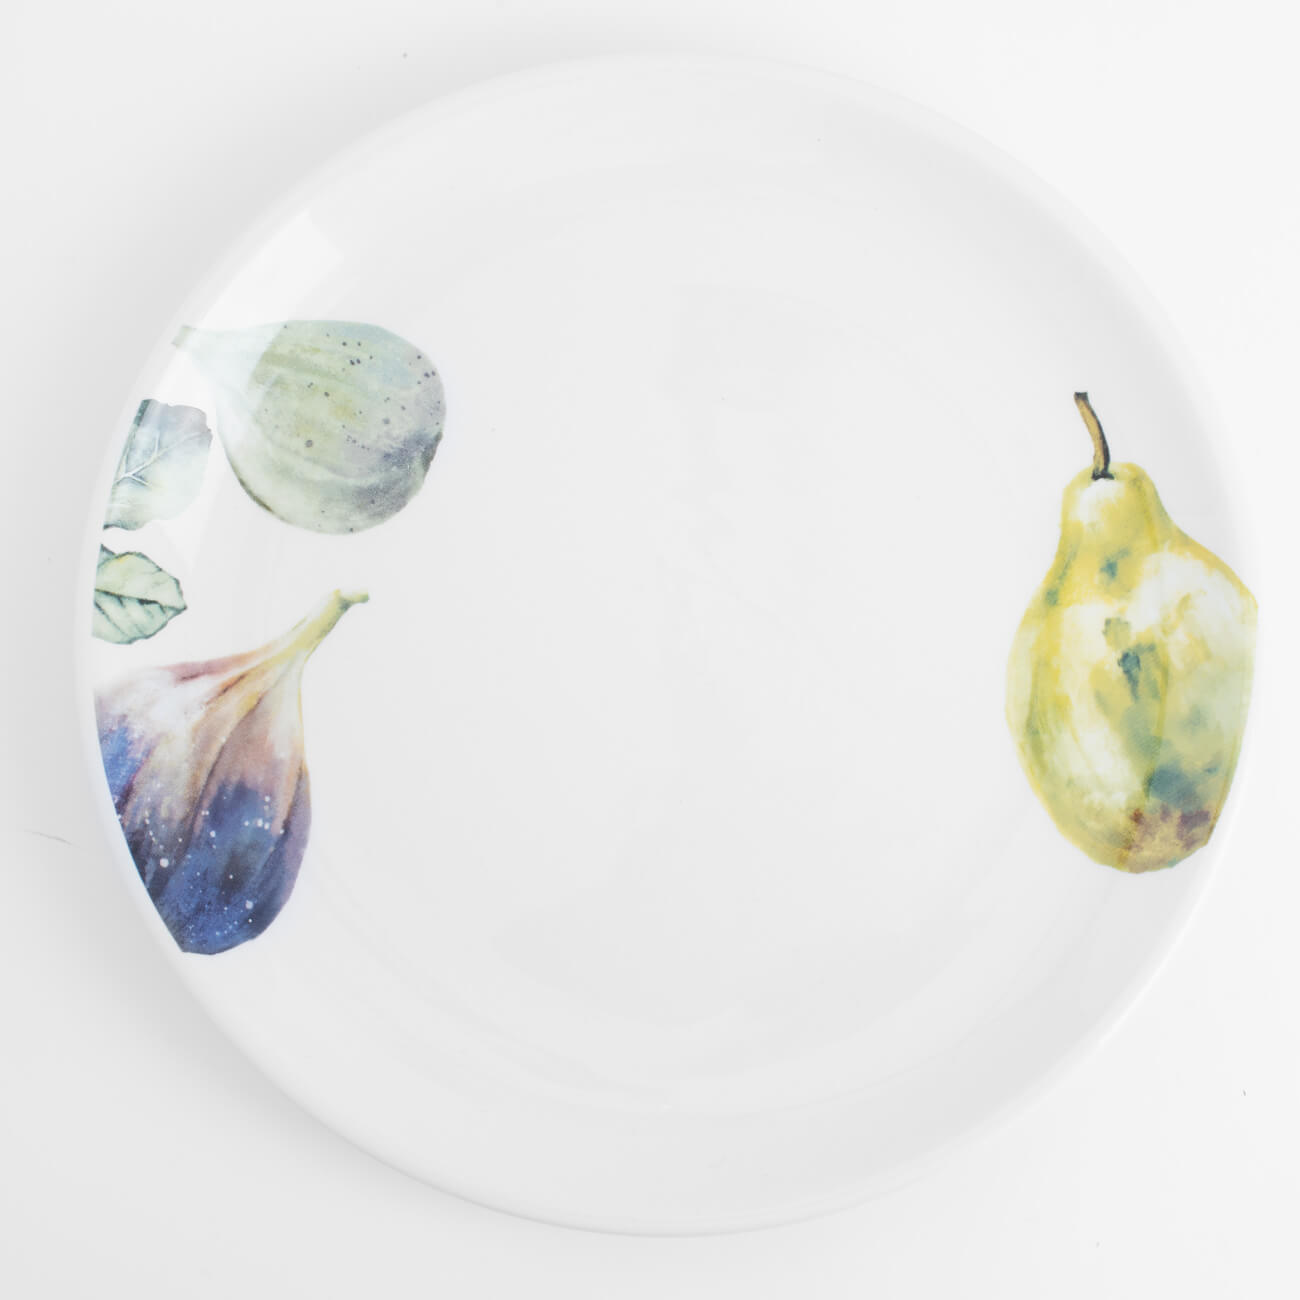 тарелка закусочная maxwell Тарелка закусочная, 21 см, керамика, белая, Инжир и груша, Fruit garden